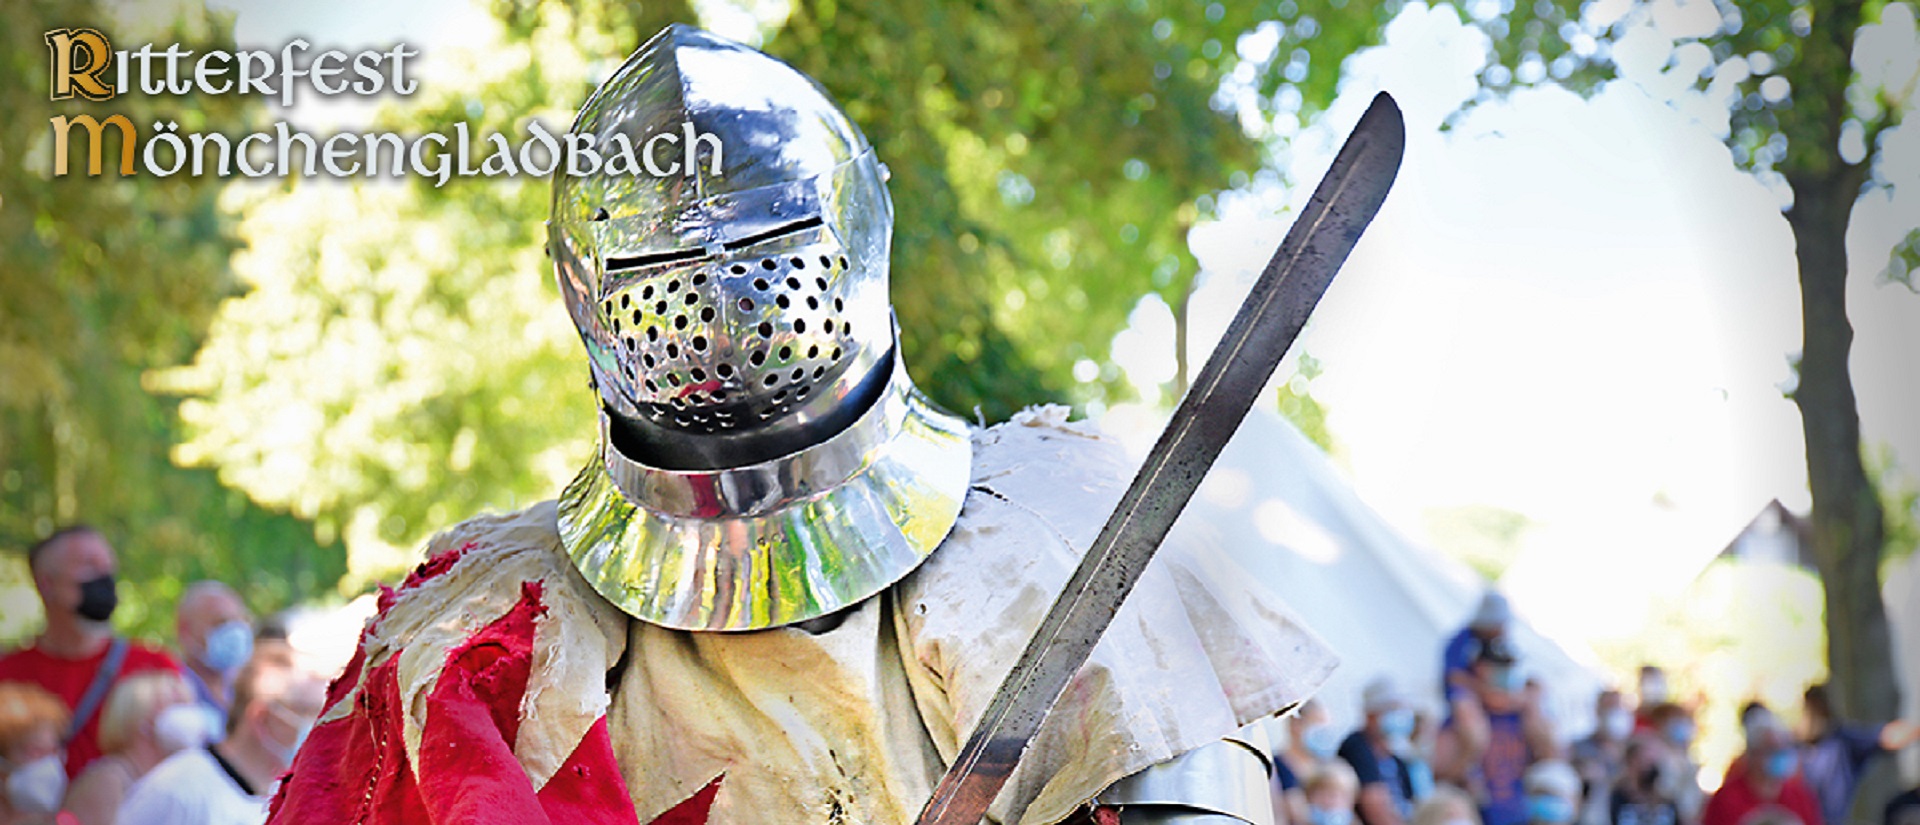 ›Ritterfest Mönchengladbach‹ inszeniert das Hochmittelalter